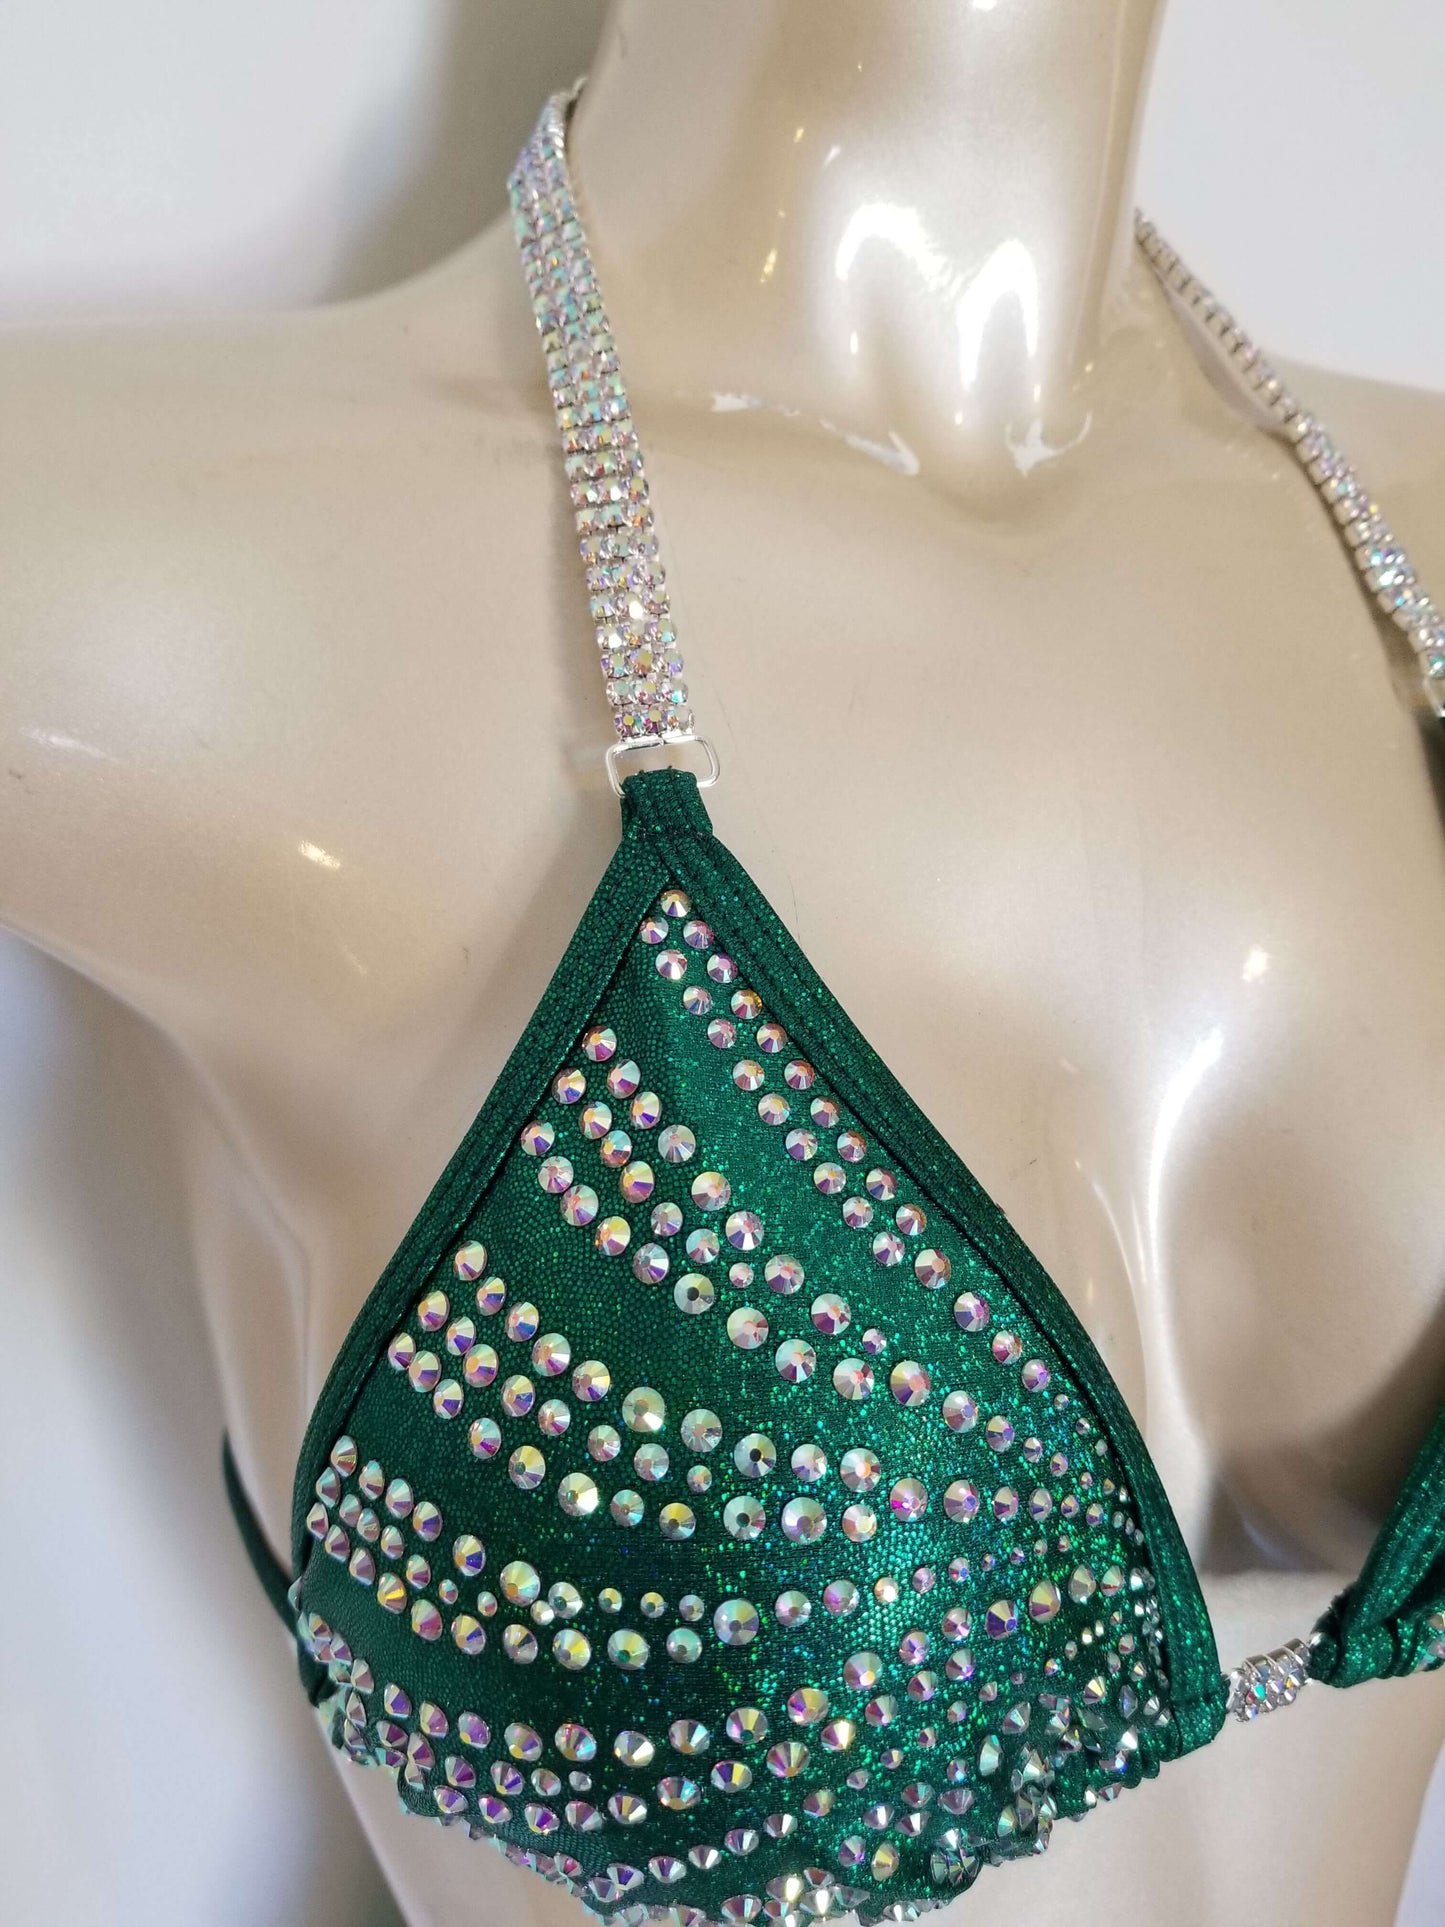 Emerald green figure suit bikini with AB rhinestones in a magic array pattern design